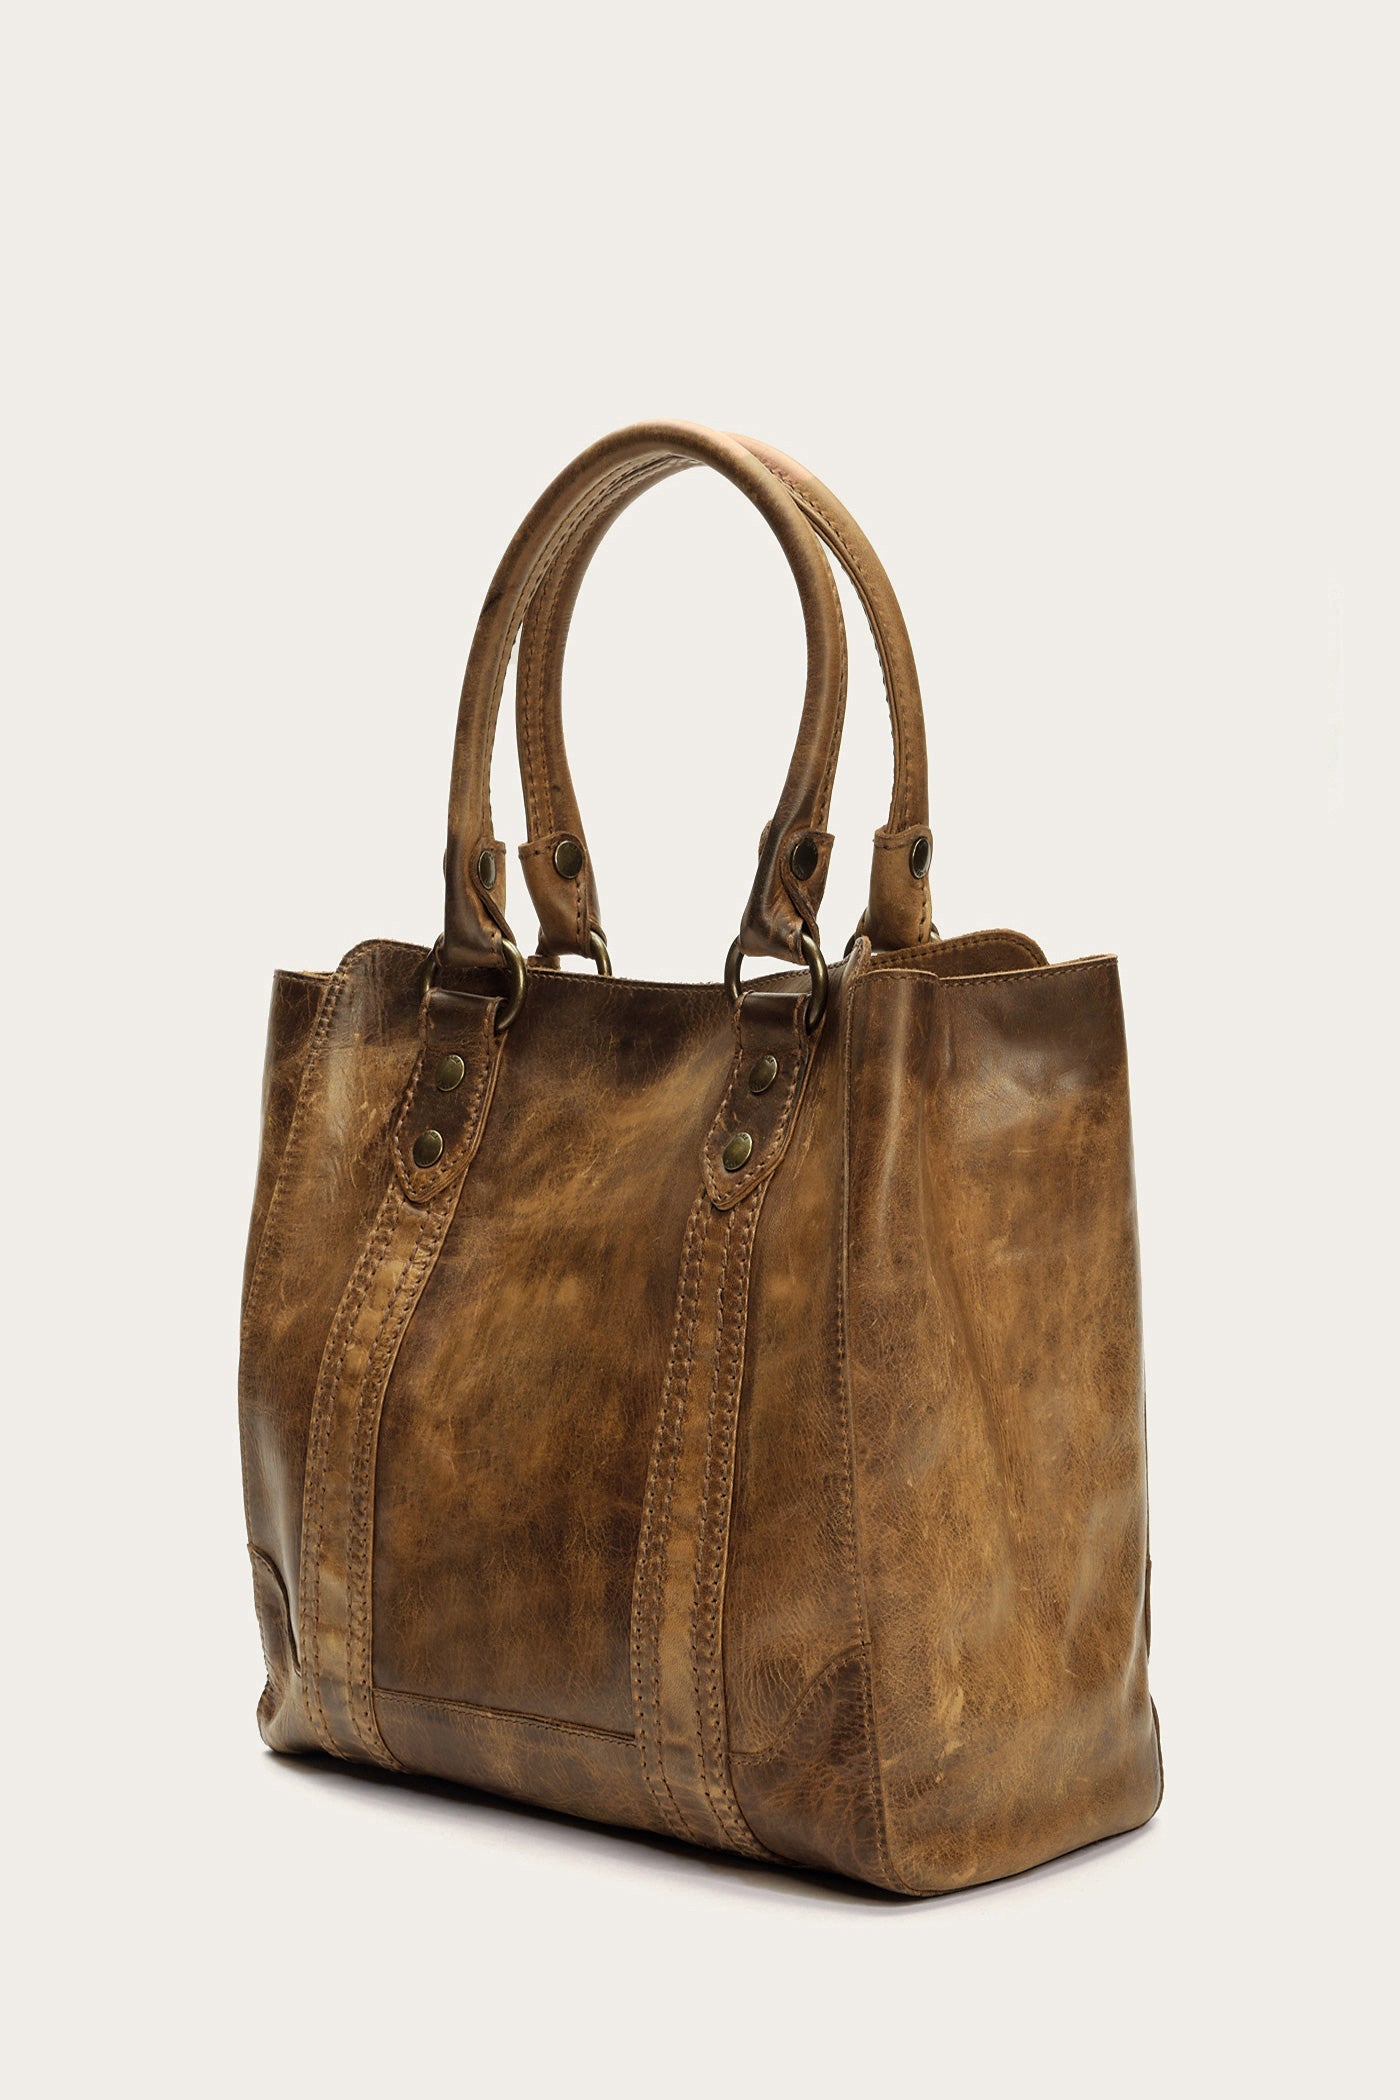 Frye womens Frye Cross Body Handbag, Beige, One Size US: Handbags:  Amazon.com